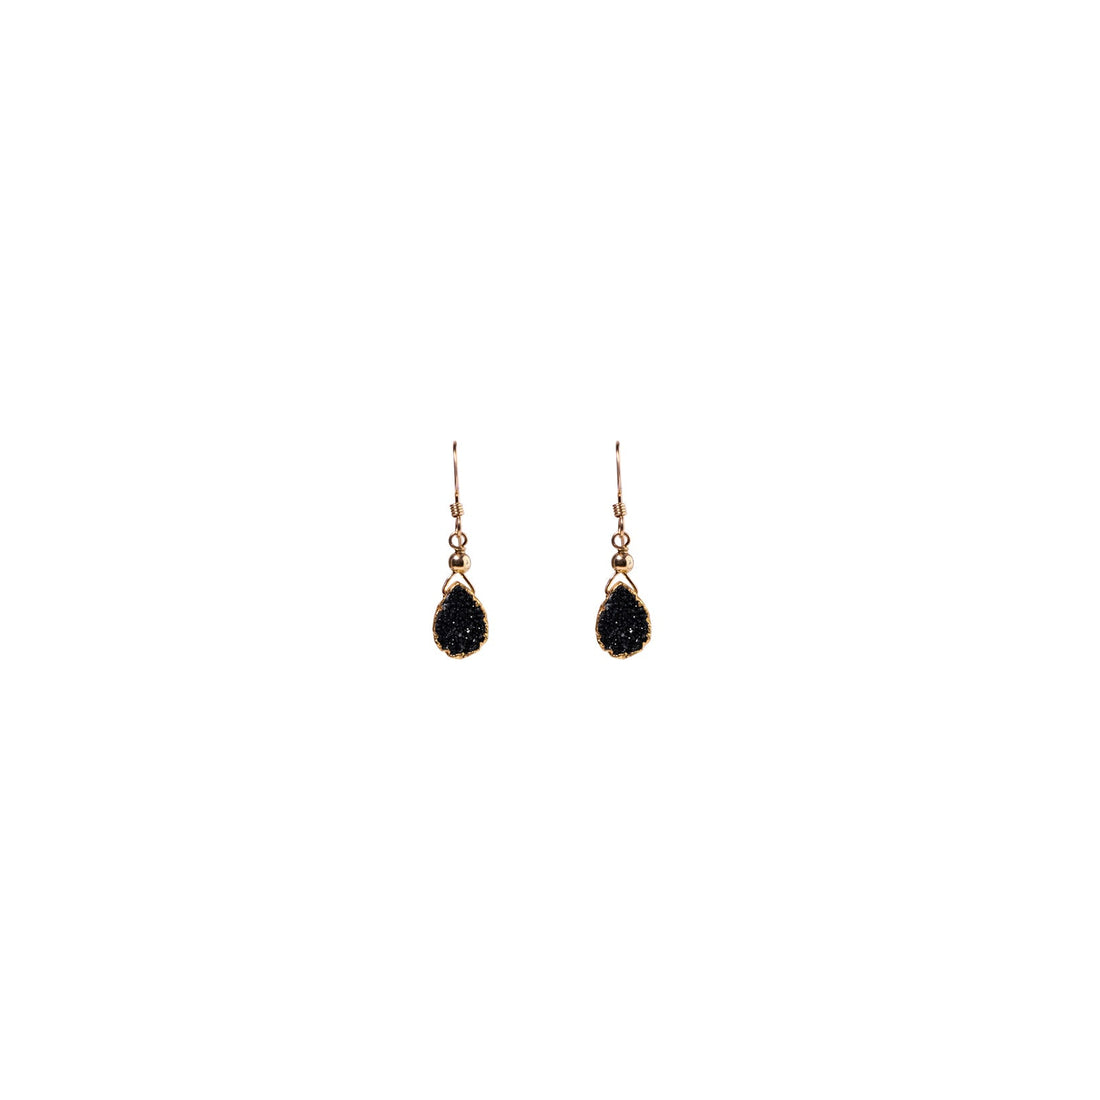 Julianna Earrings, Black Druzy Almond with contoured Gold Vermeil Earrings Sayulita Sol 